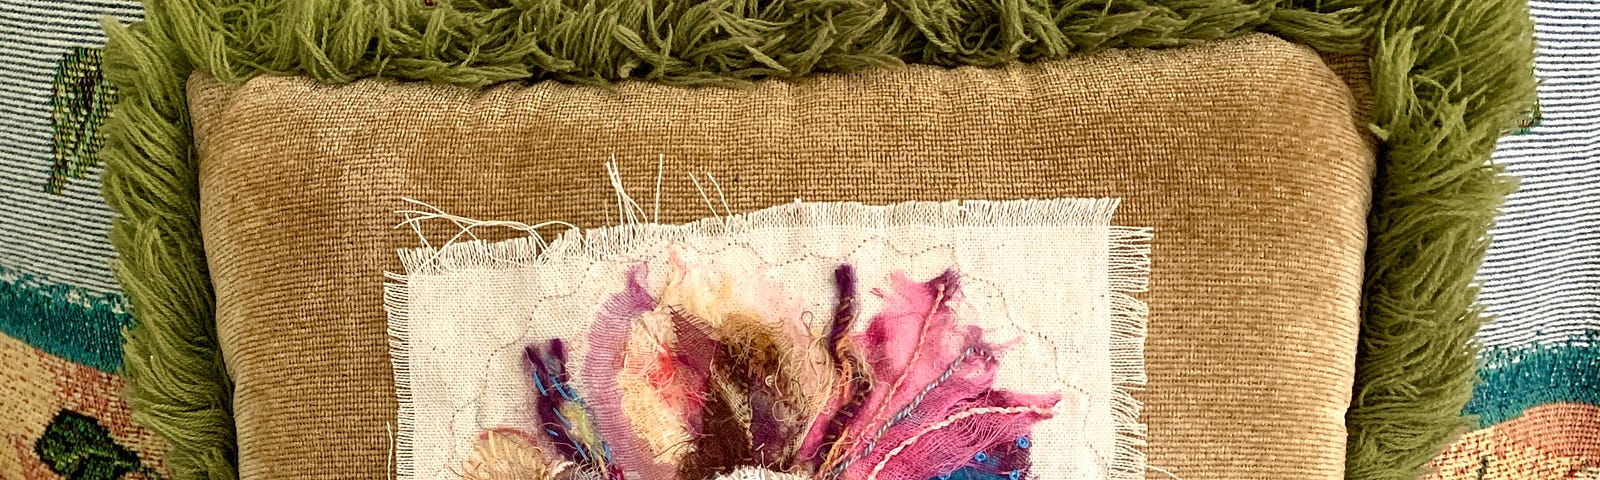 A floral fiber art piece used as a pillow embellishment